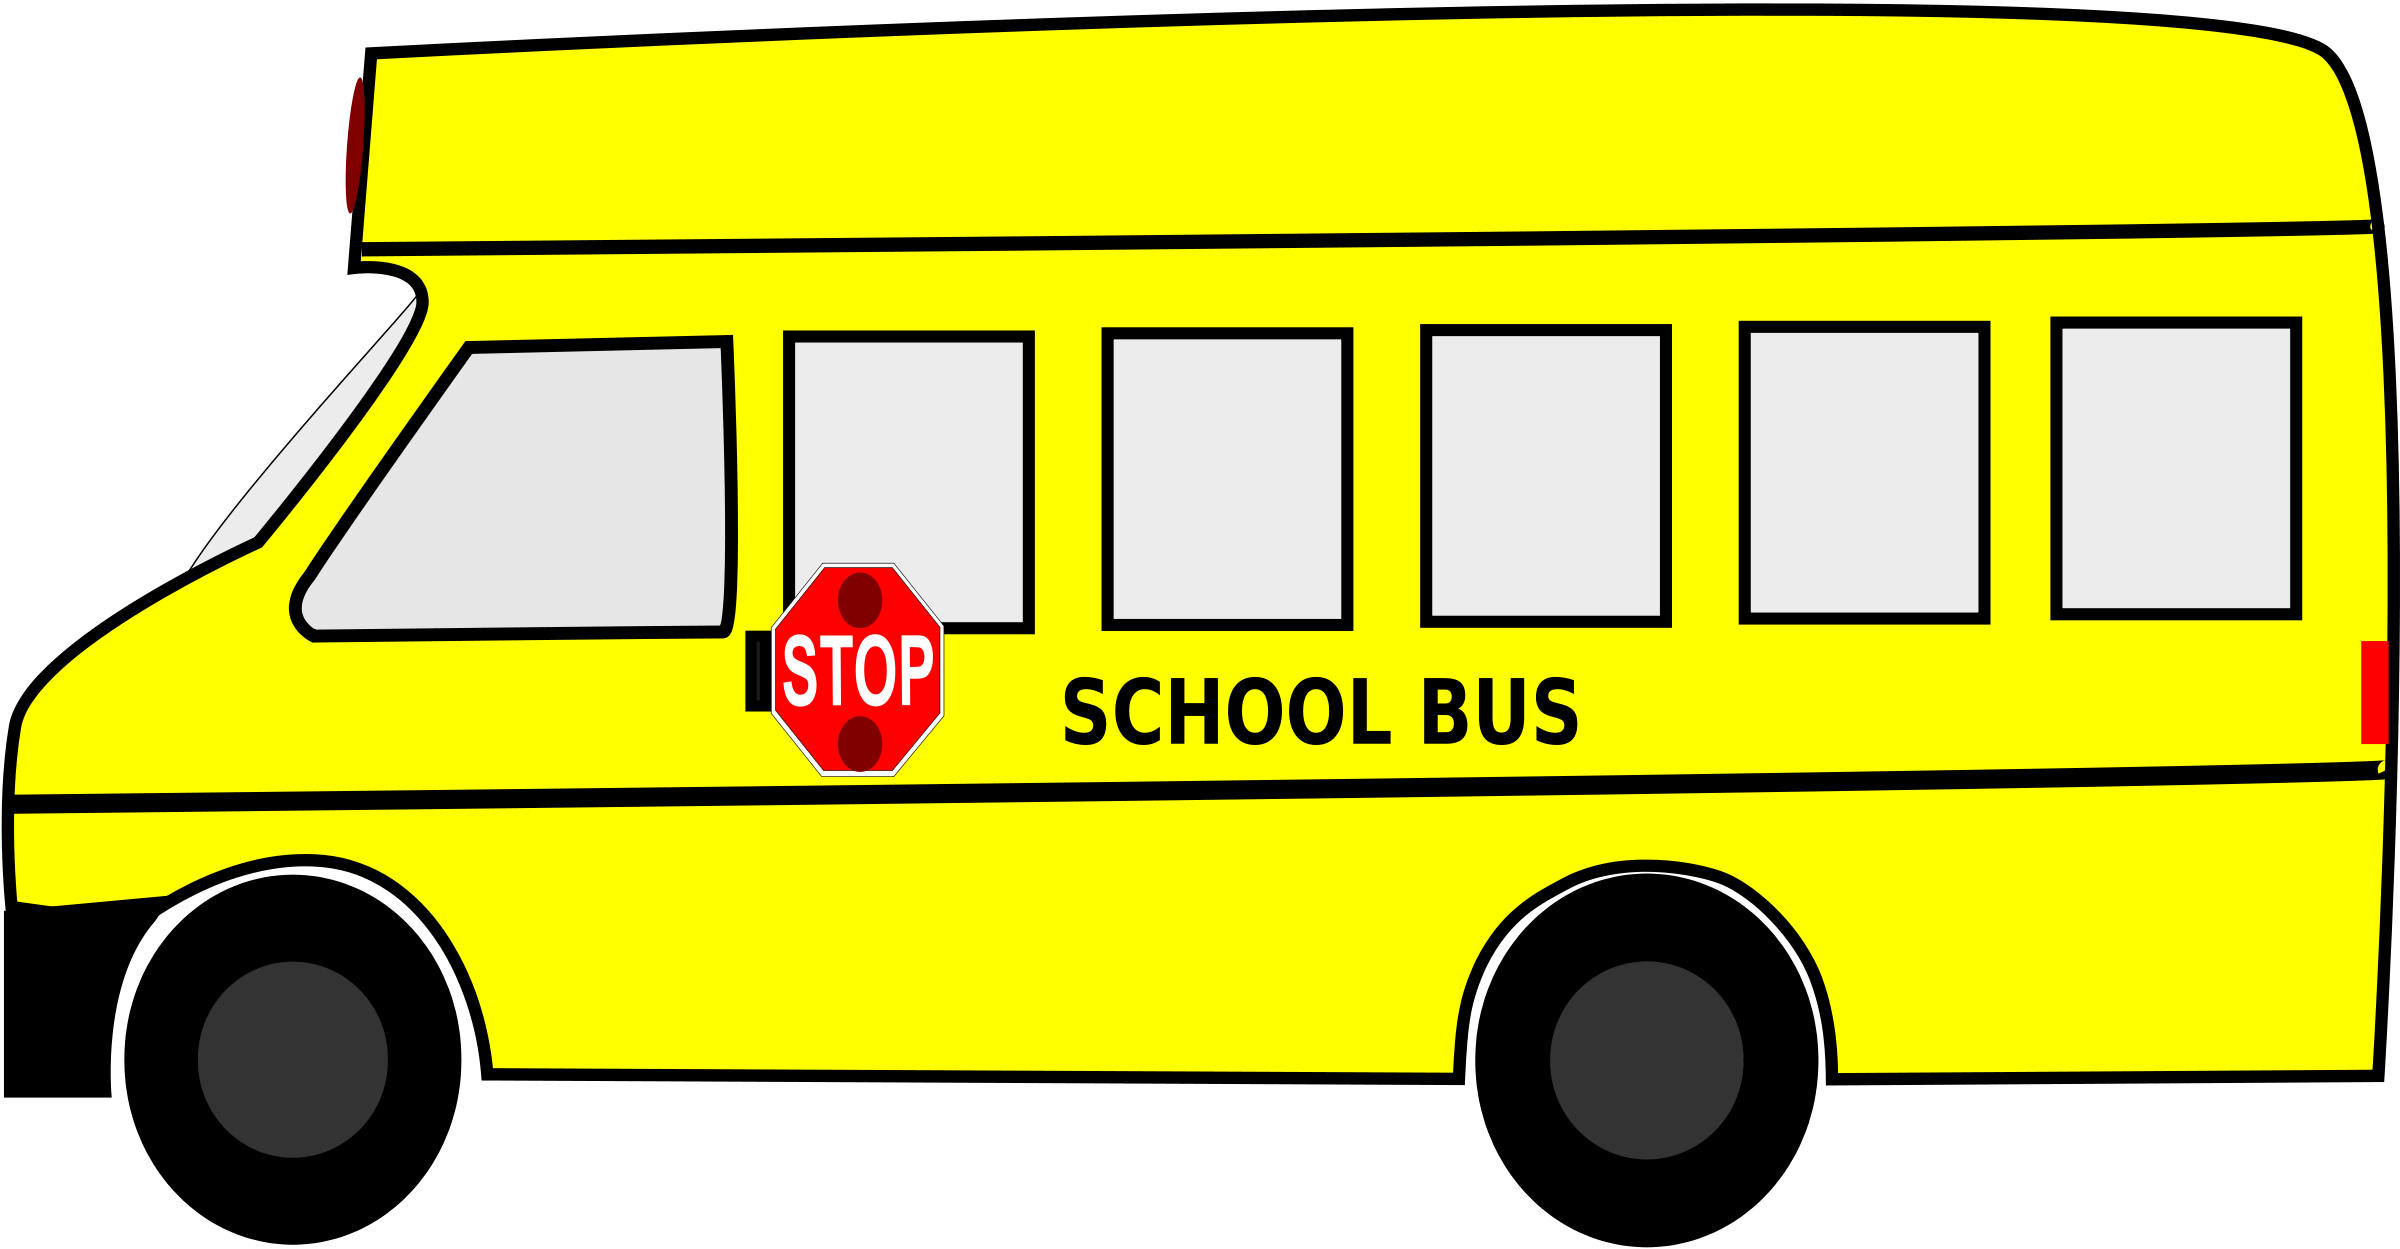 Free Cute Cartoon School Bus 